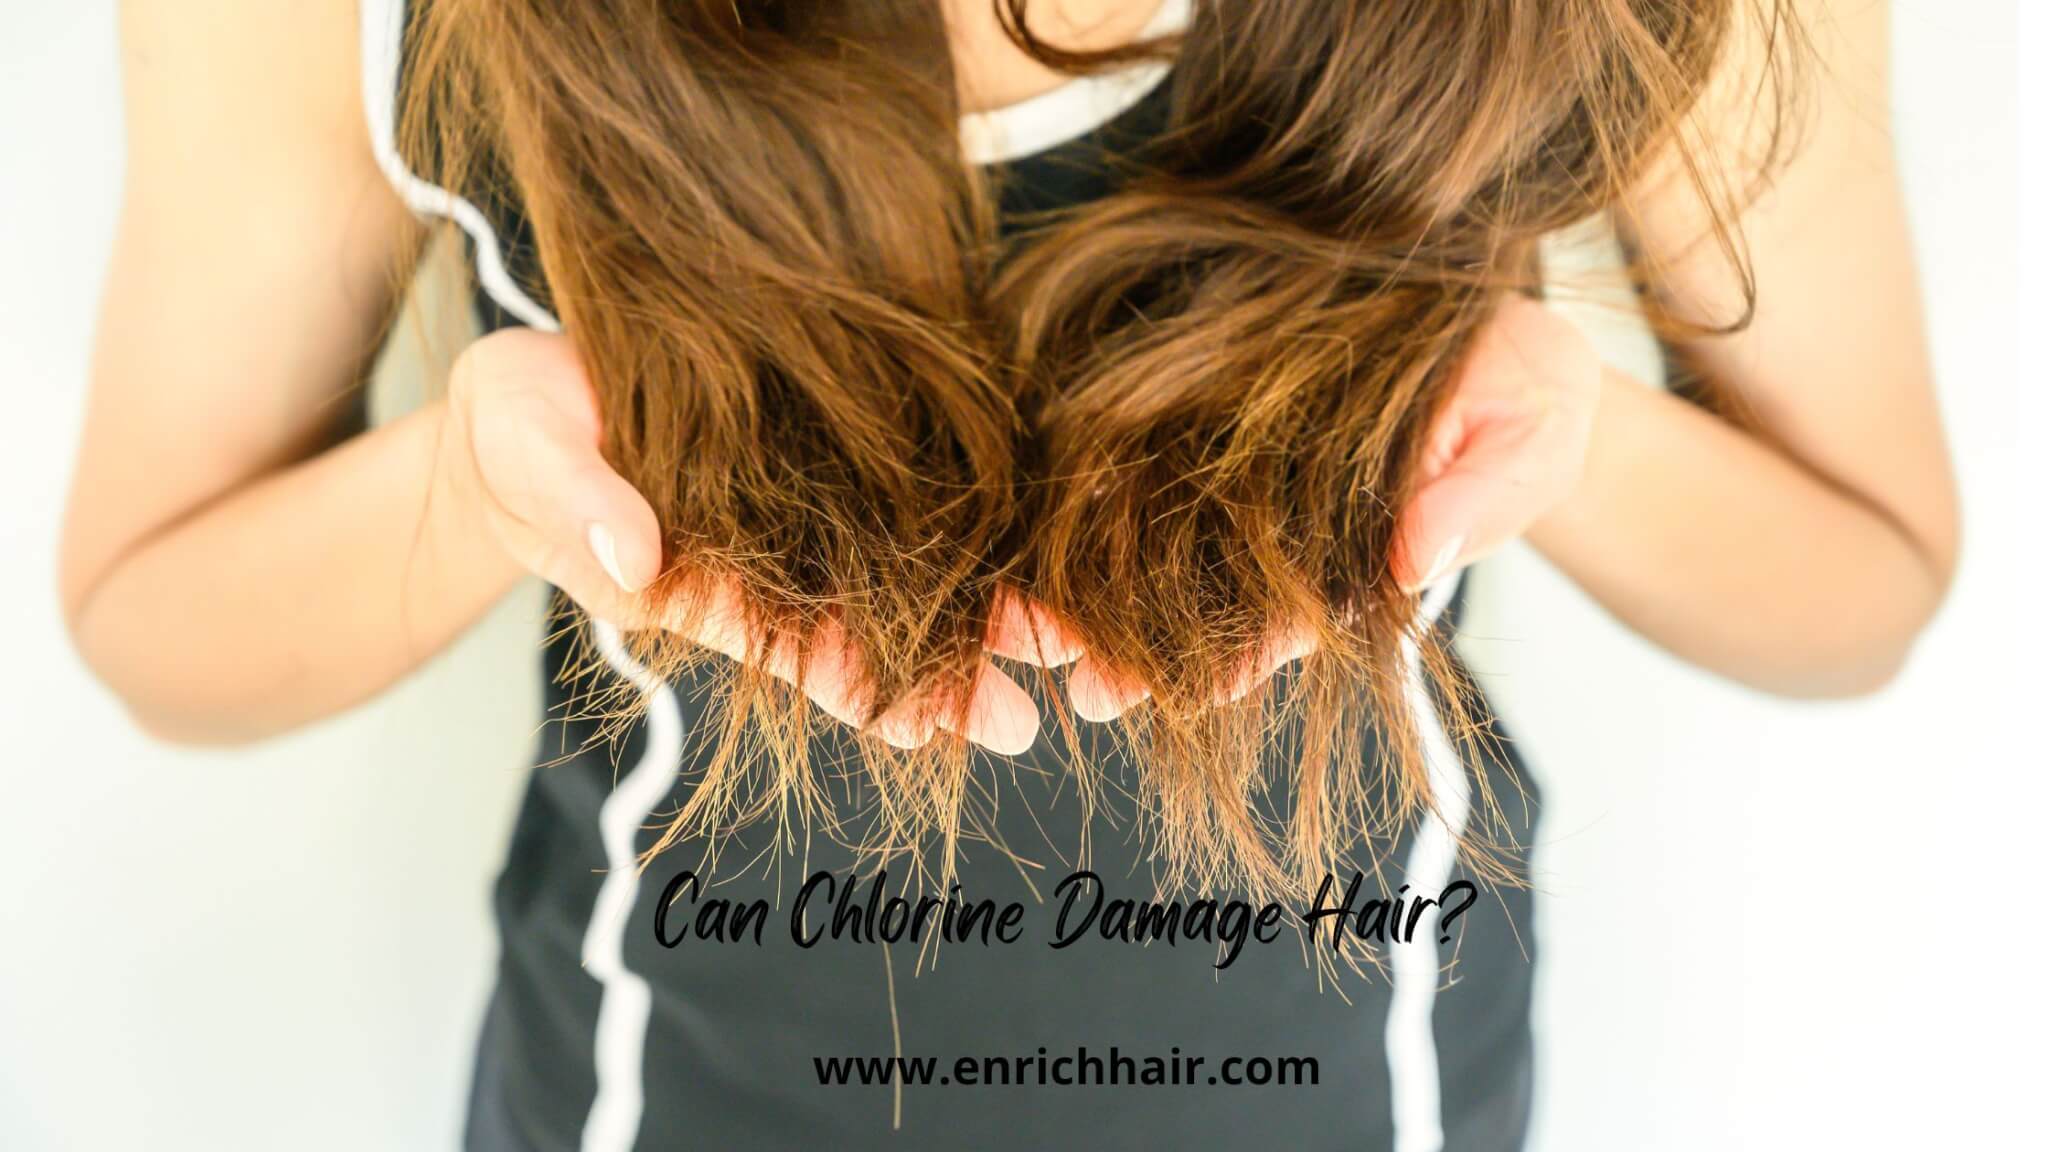 Can Chlorine Damage Hair?